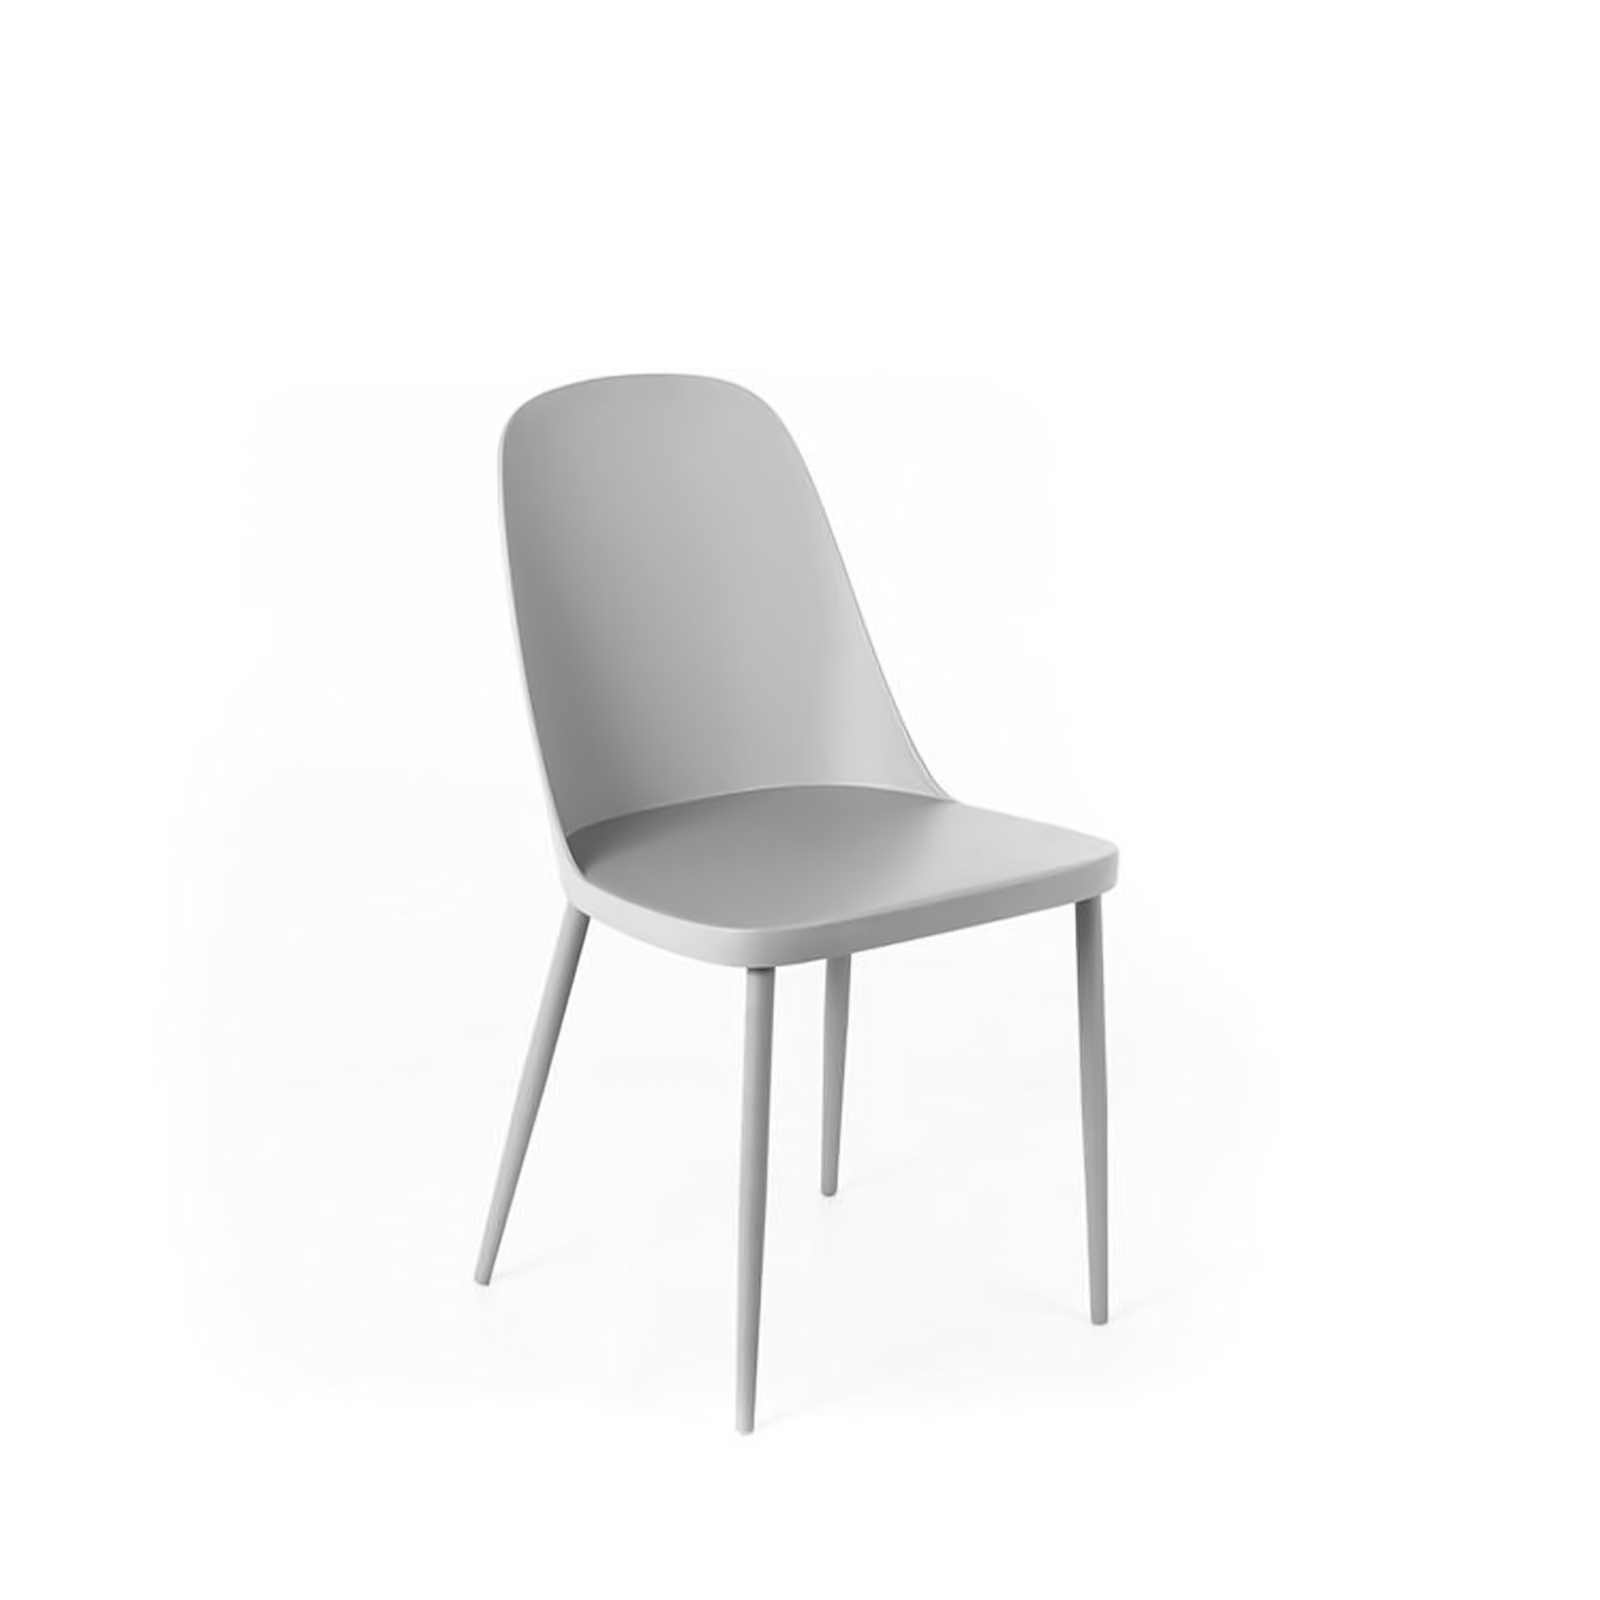 Set di sedie moderne in polipropilene "Paola" con gambe in metallo verniciato